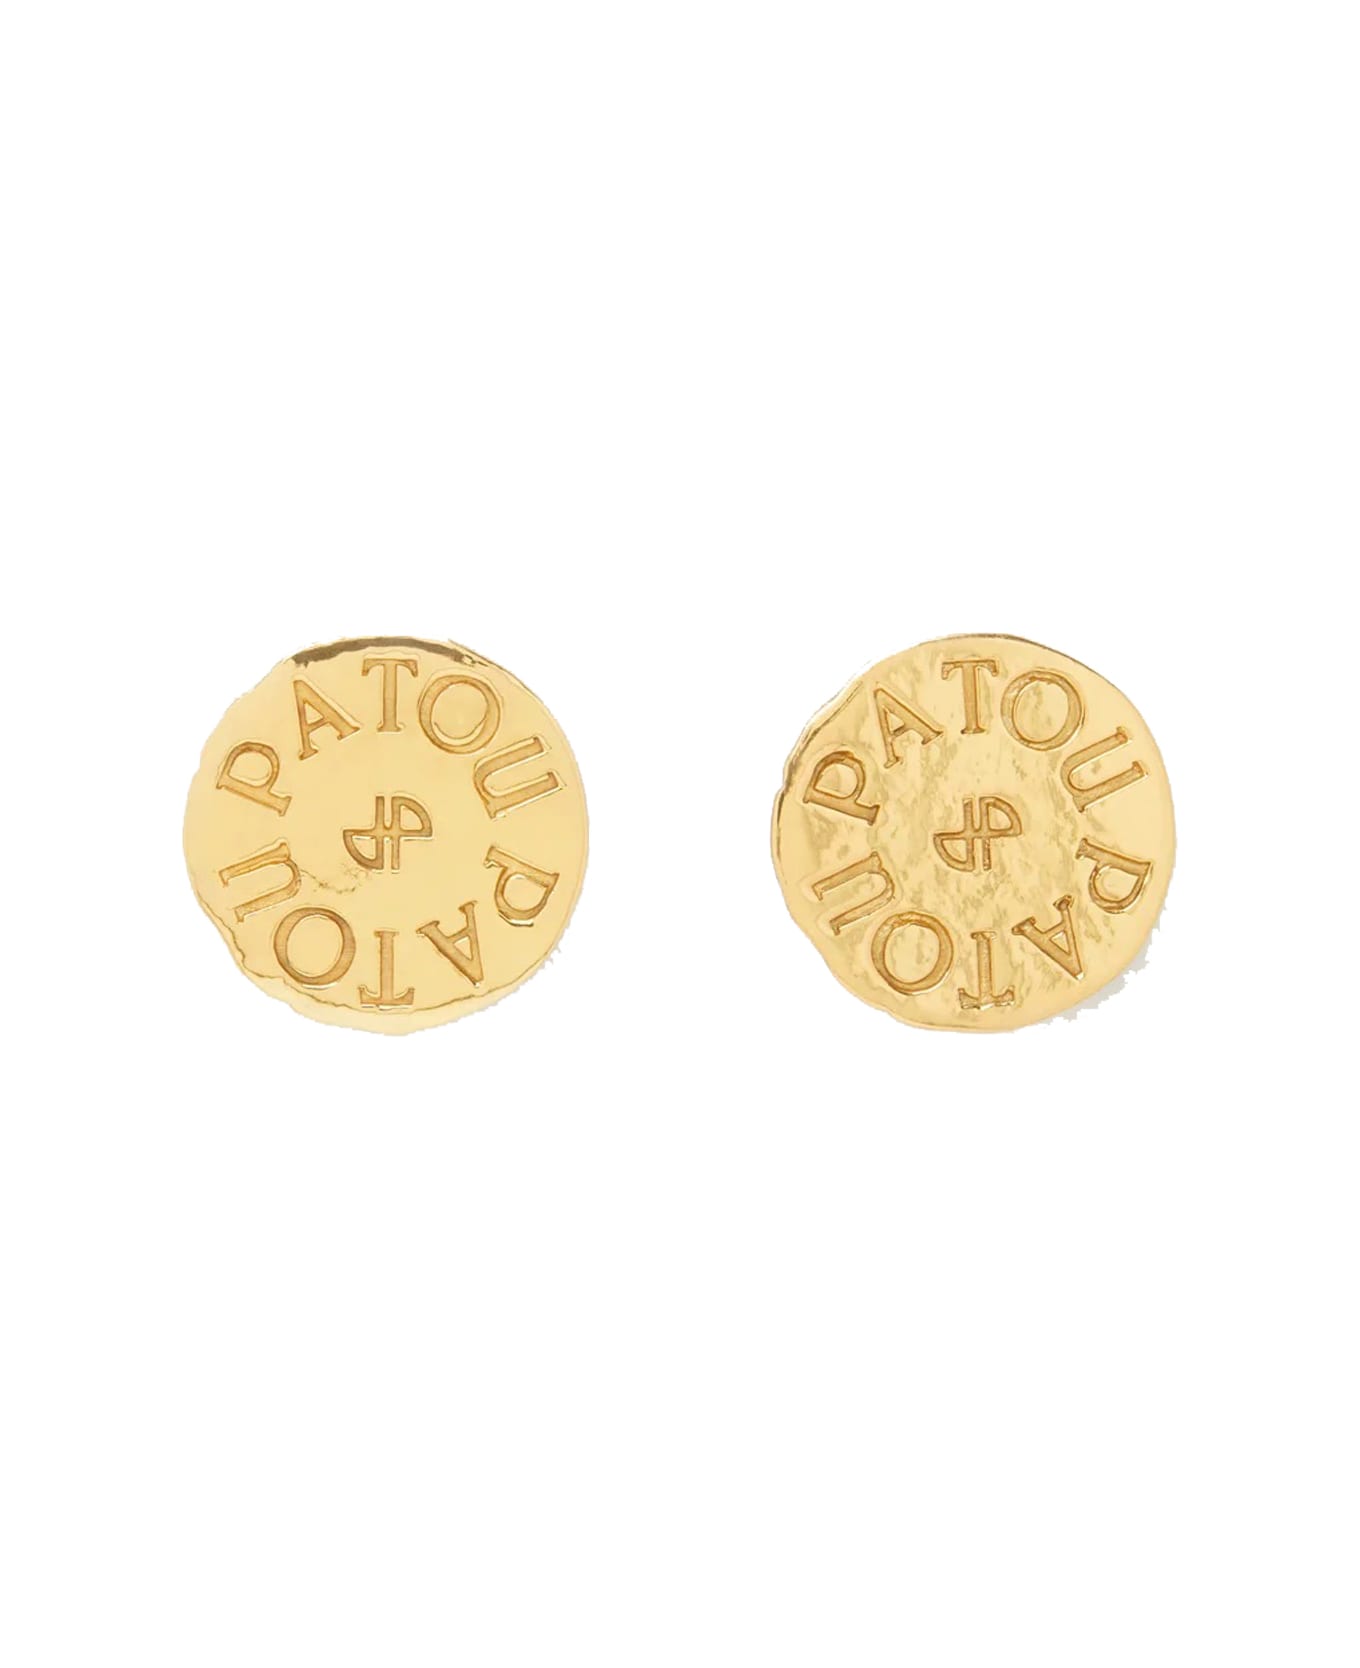 Patou Earrings - GOLD